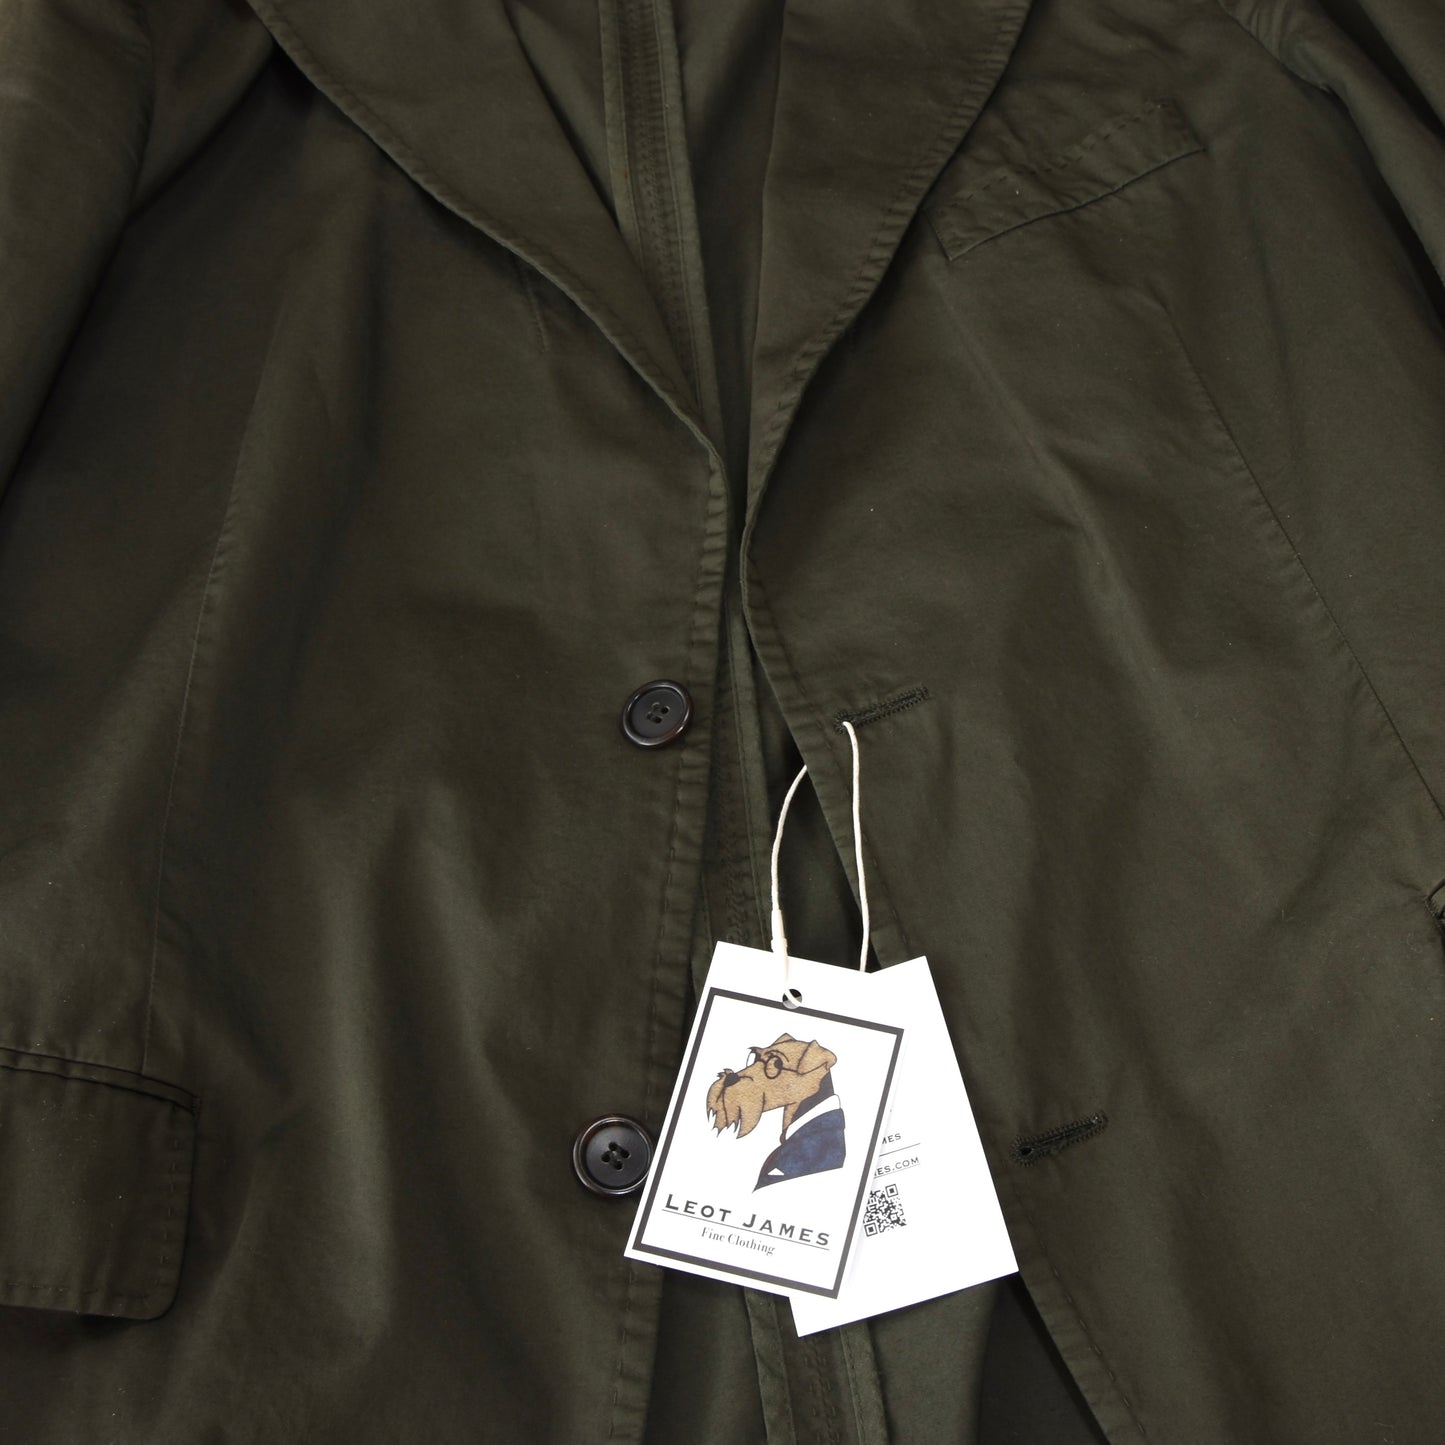 Hugo Boss Peak Lapel Cotton Jacket Size 52 - Military Green